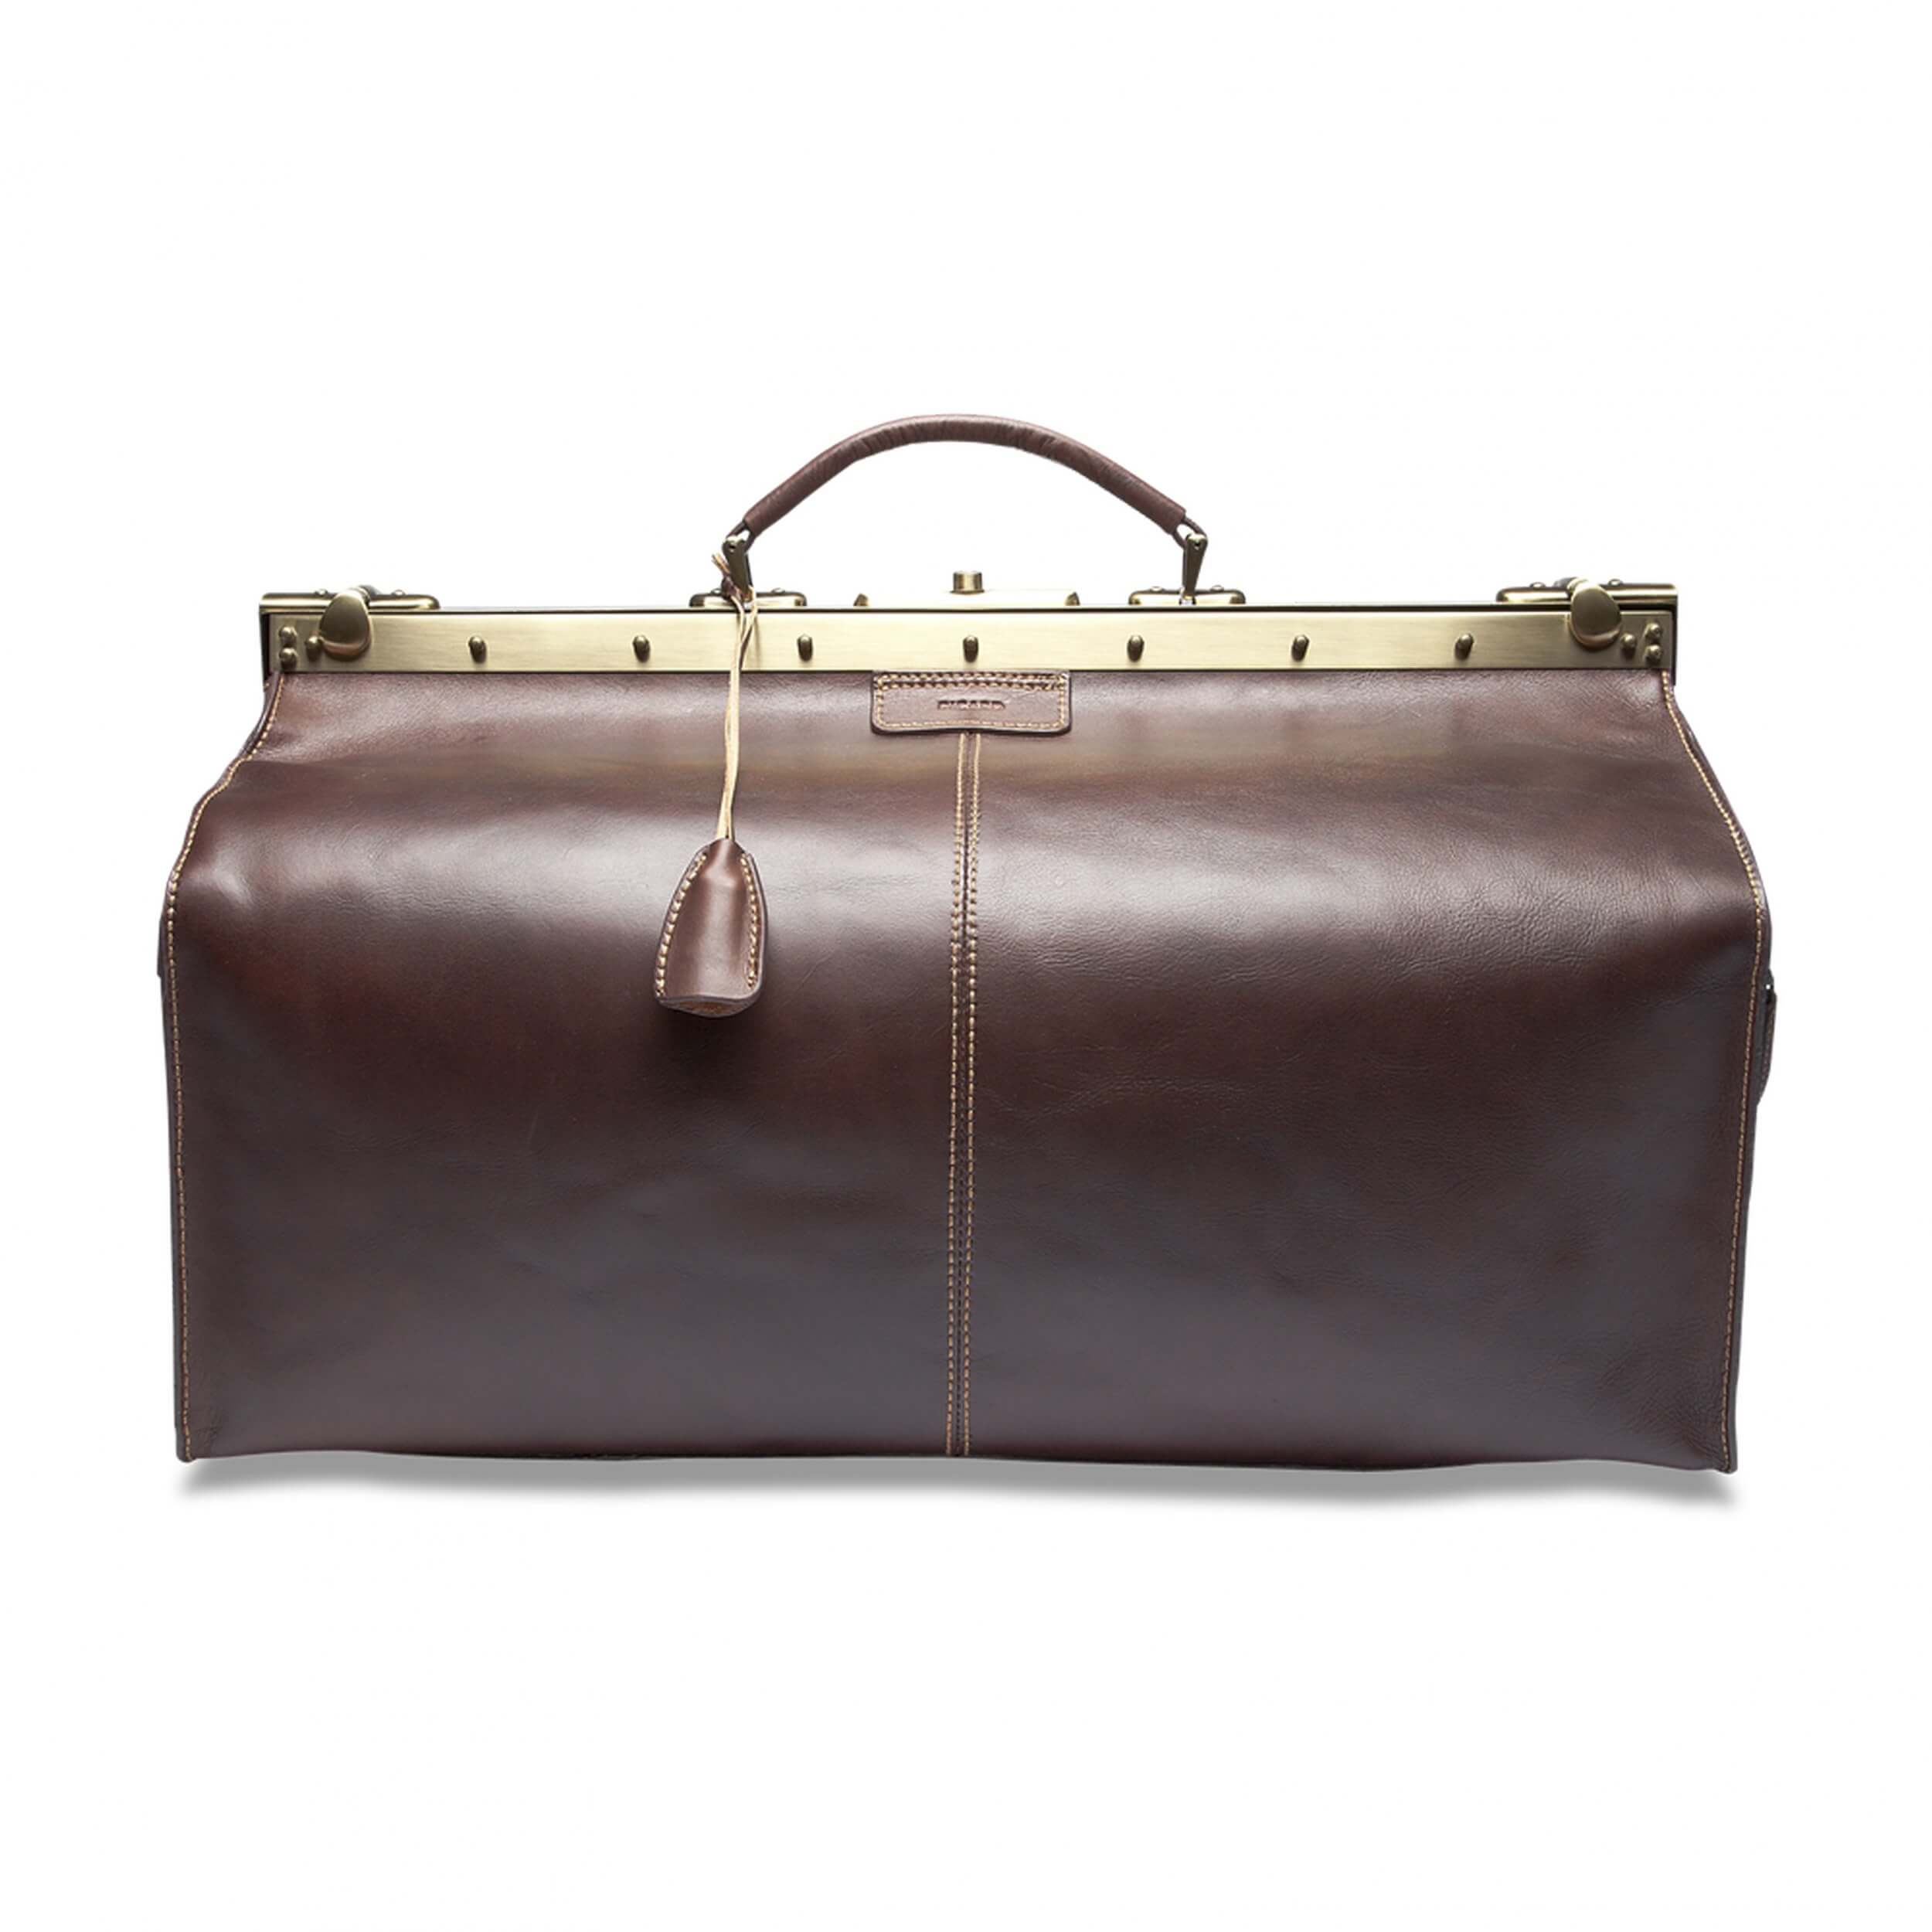 PICARD Toscana Leather travel bag 6939